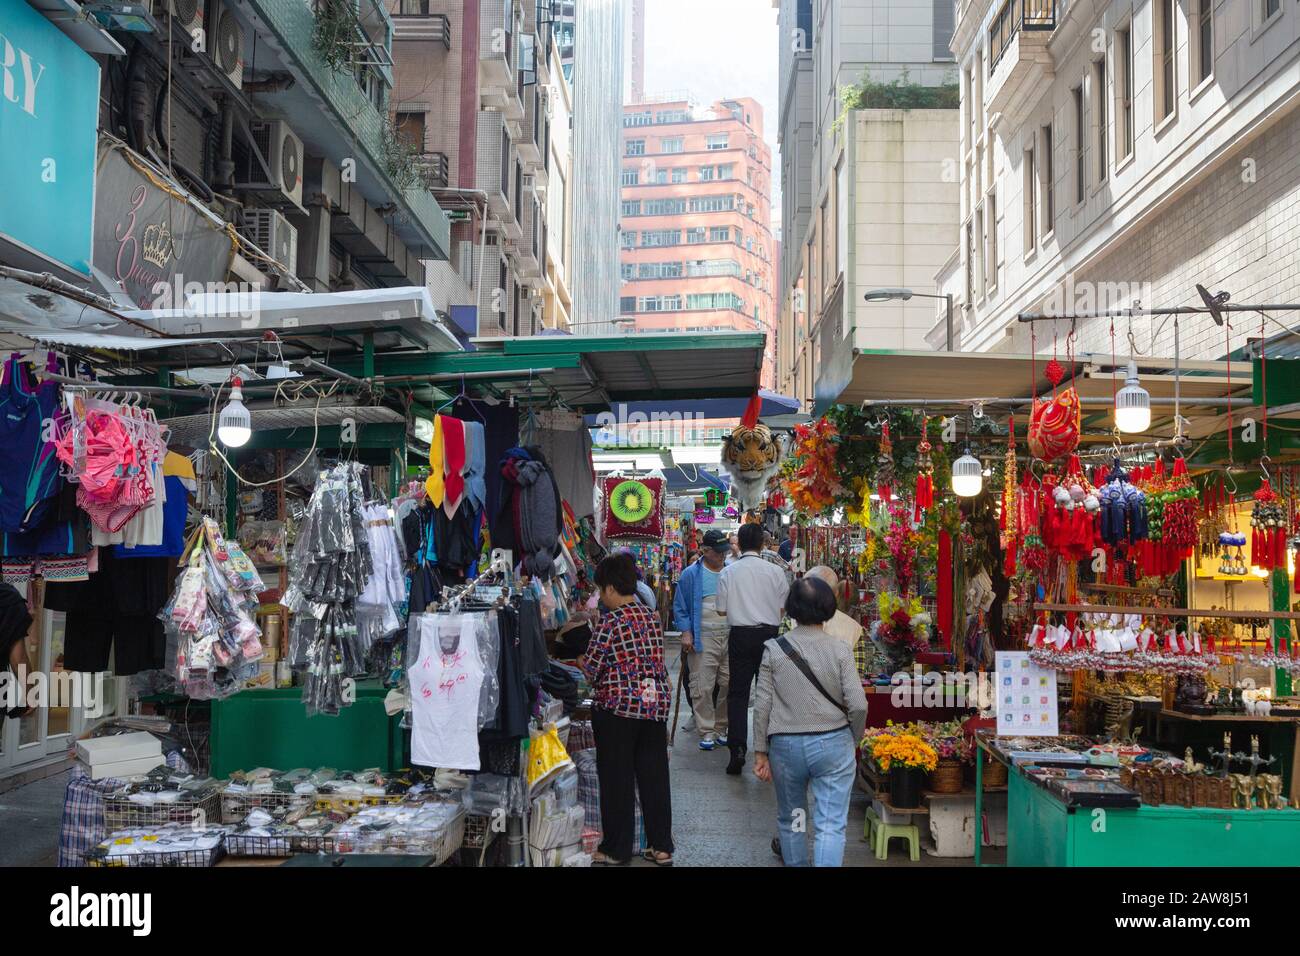 Mercato di Hong Kong - gente che acquista alle bancarelle, mercato Di Wan Chai, isola di Hong Kong, Hong Kong Asia Foto Stock